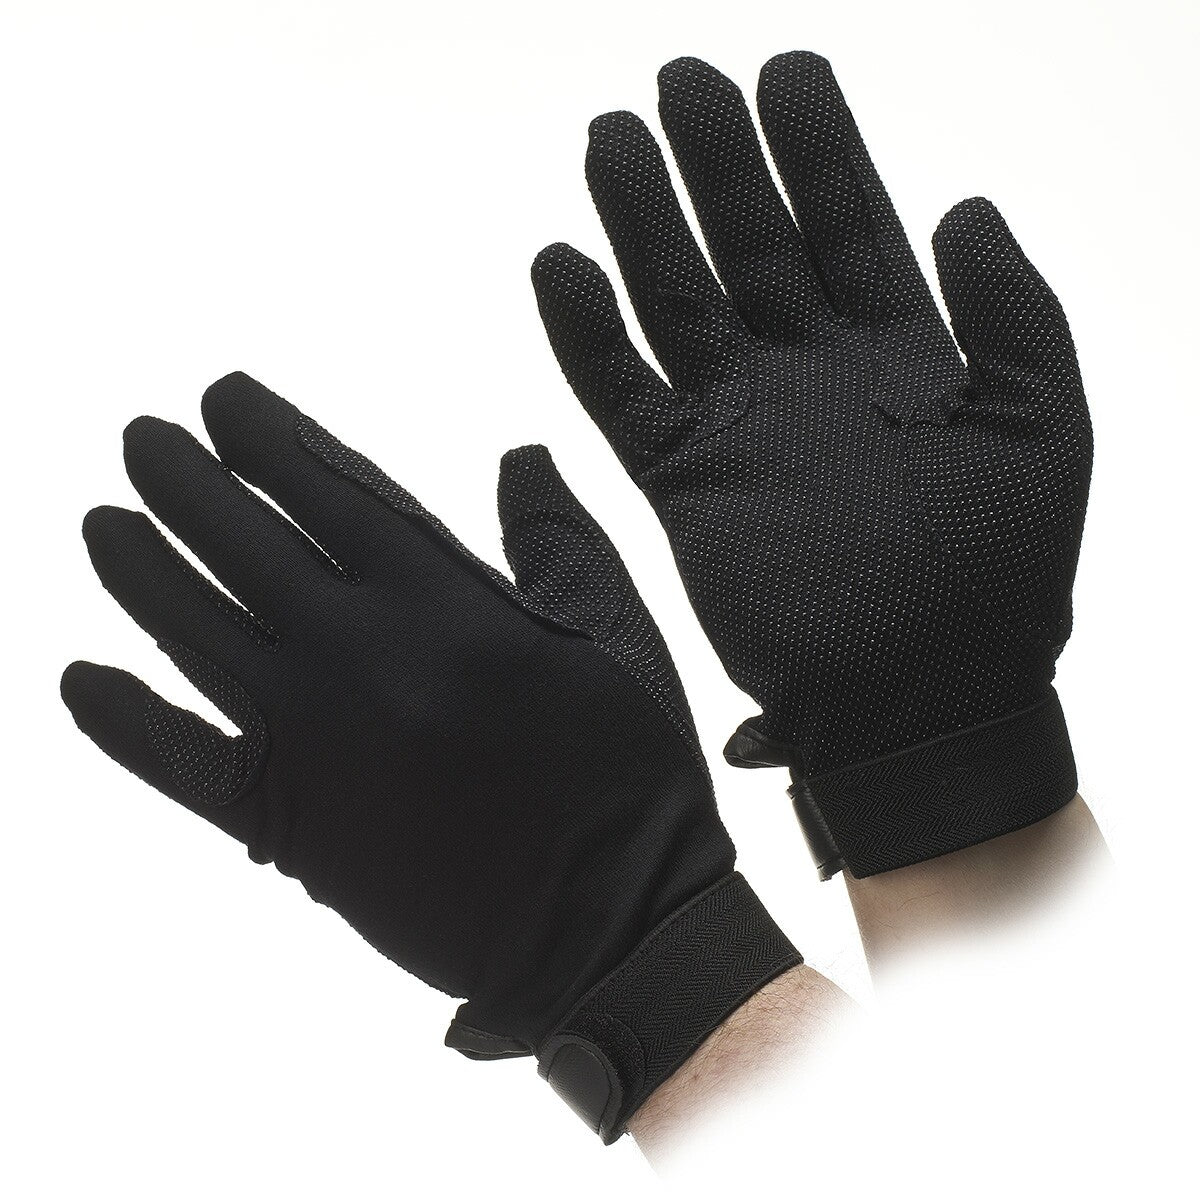 Handbell Cotton Performance Gloves - black